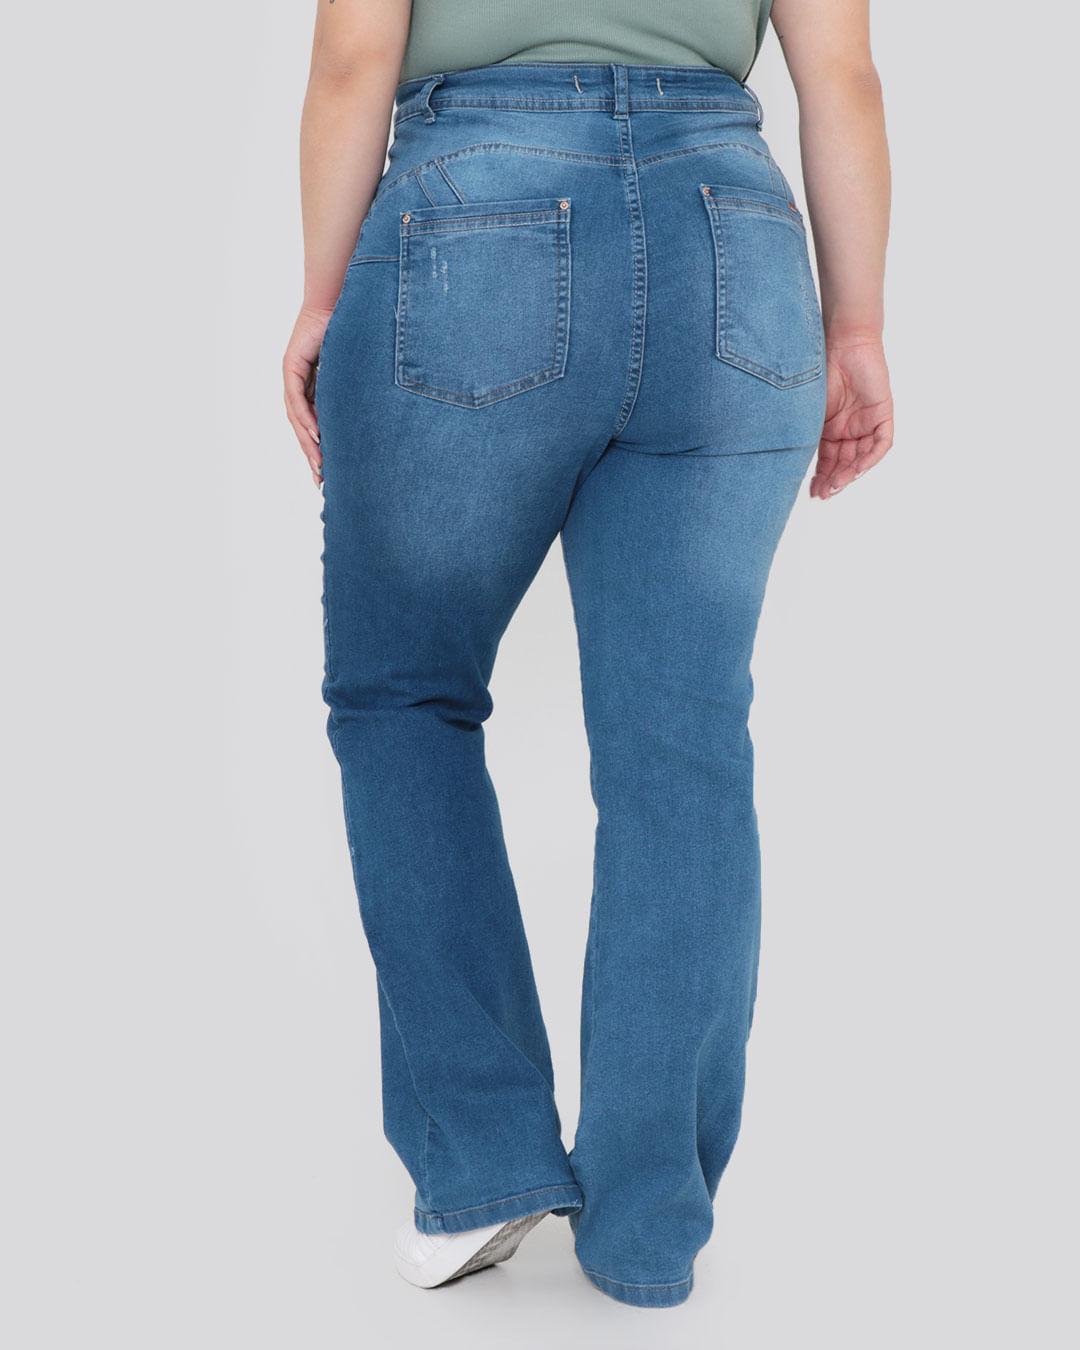 Calca-Jeans-Feminina-Plus-Size-Flare-Com-Lenco-Azul